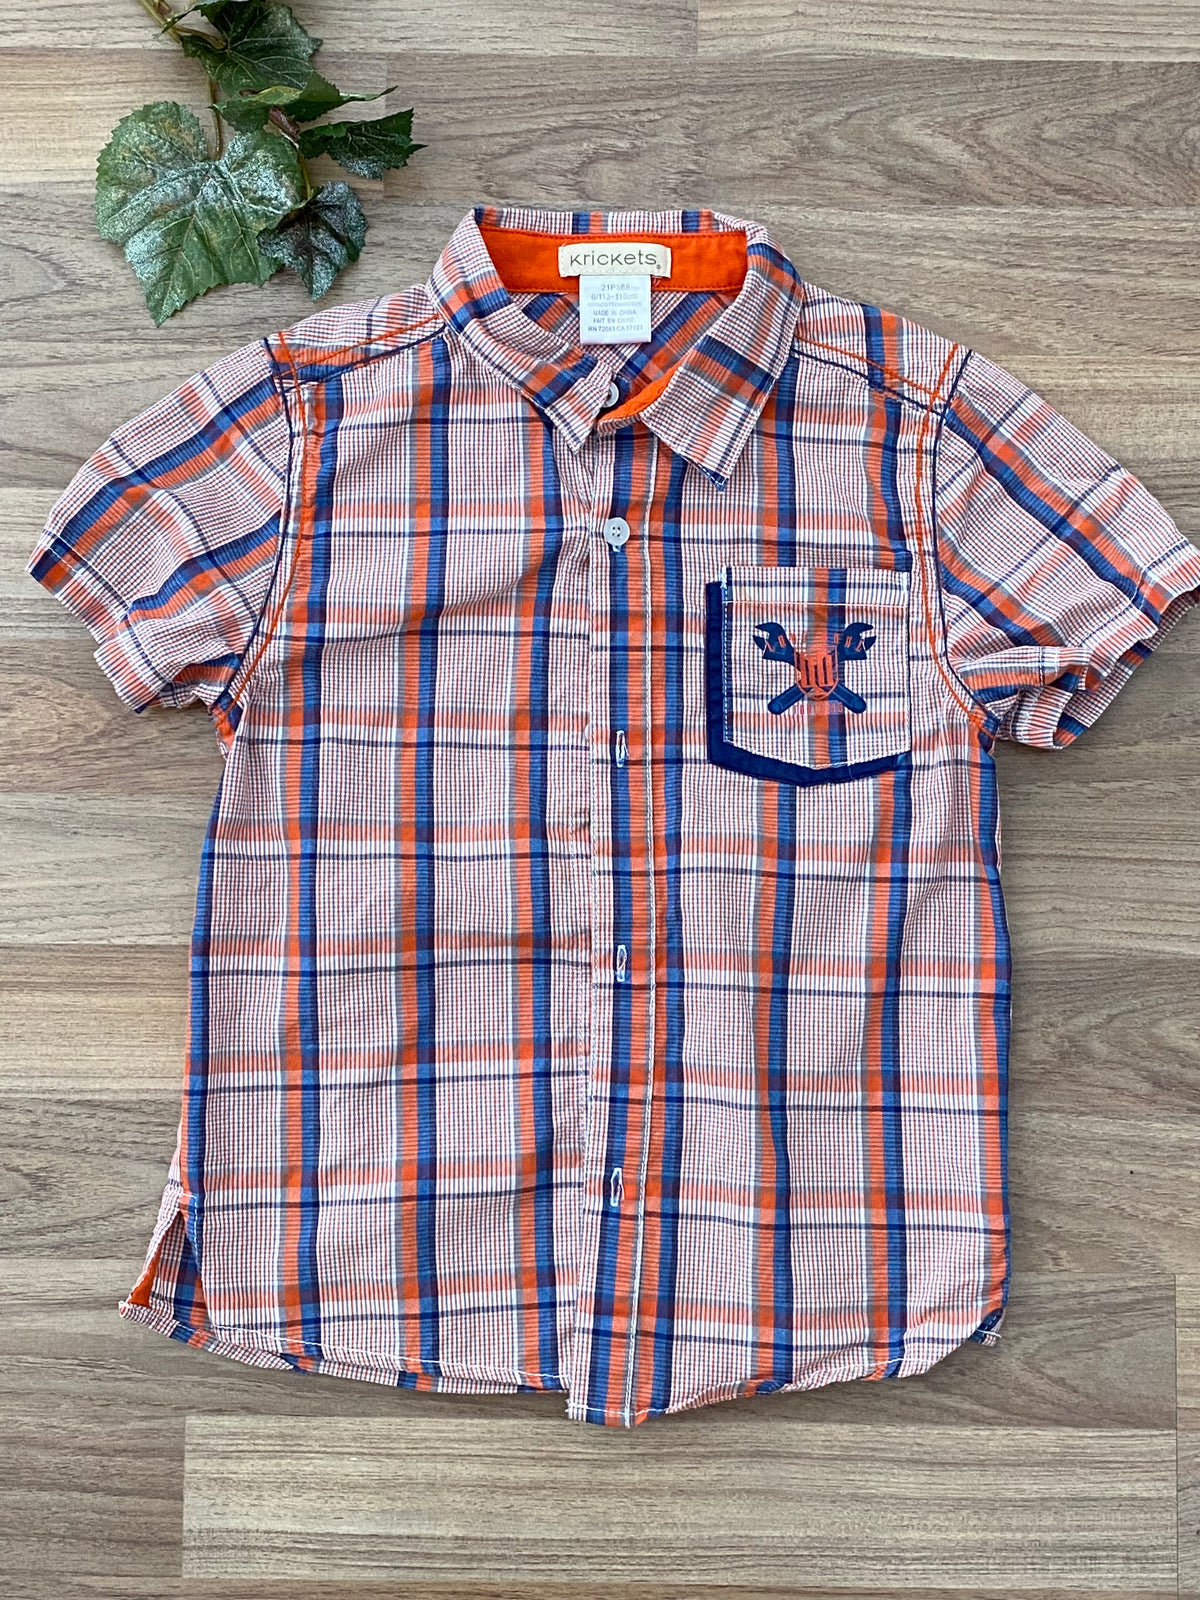 Full Button Up Shirt (Boys size 6)